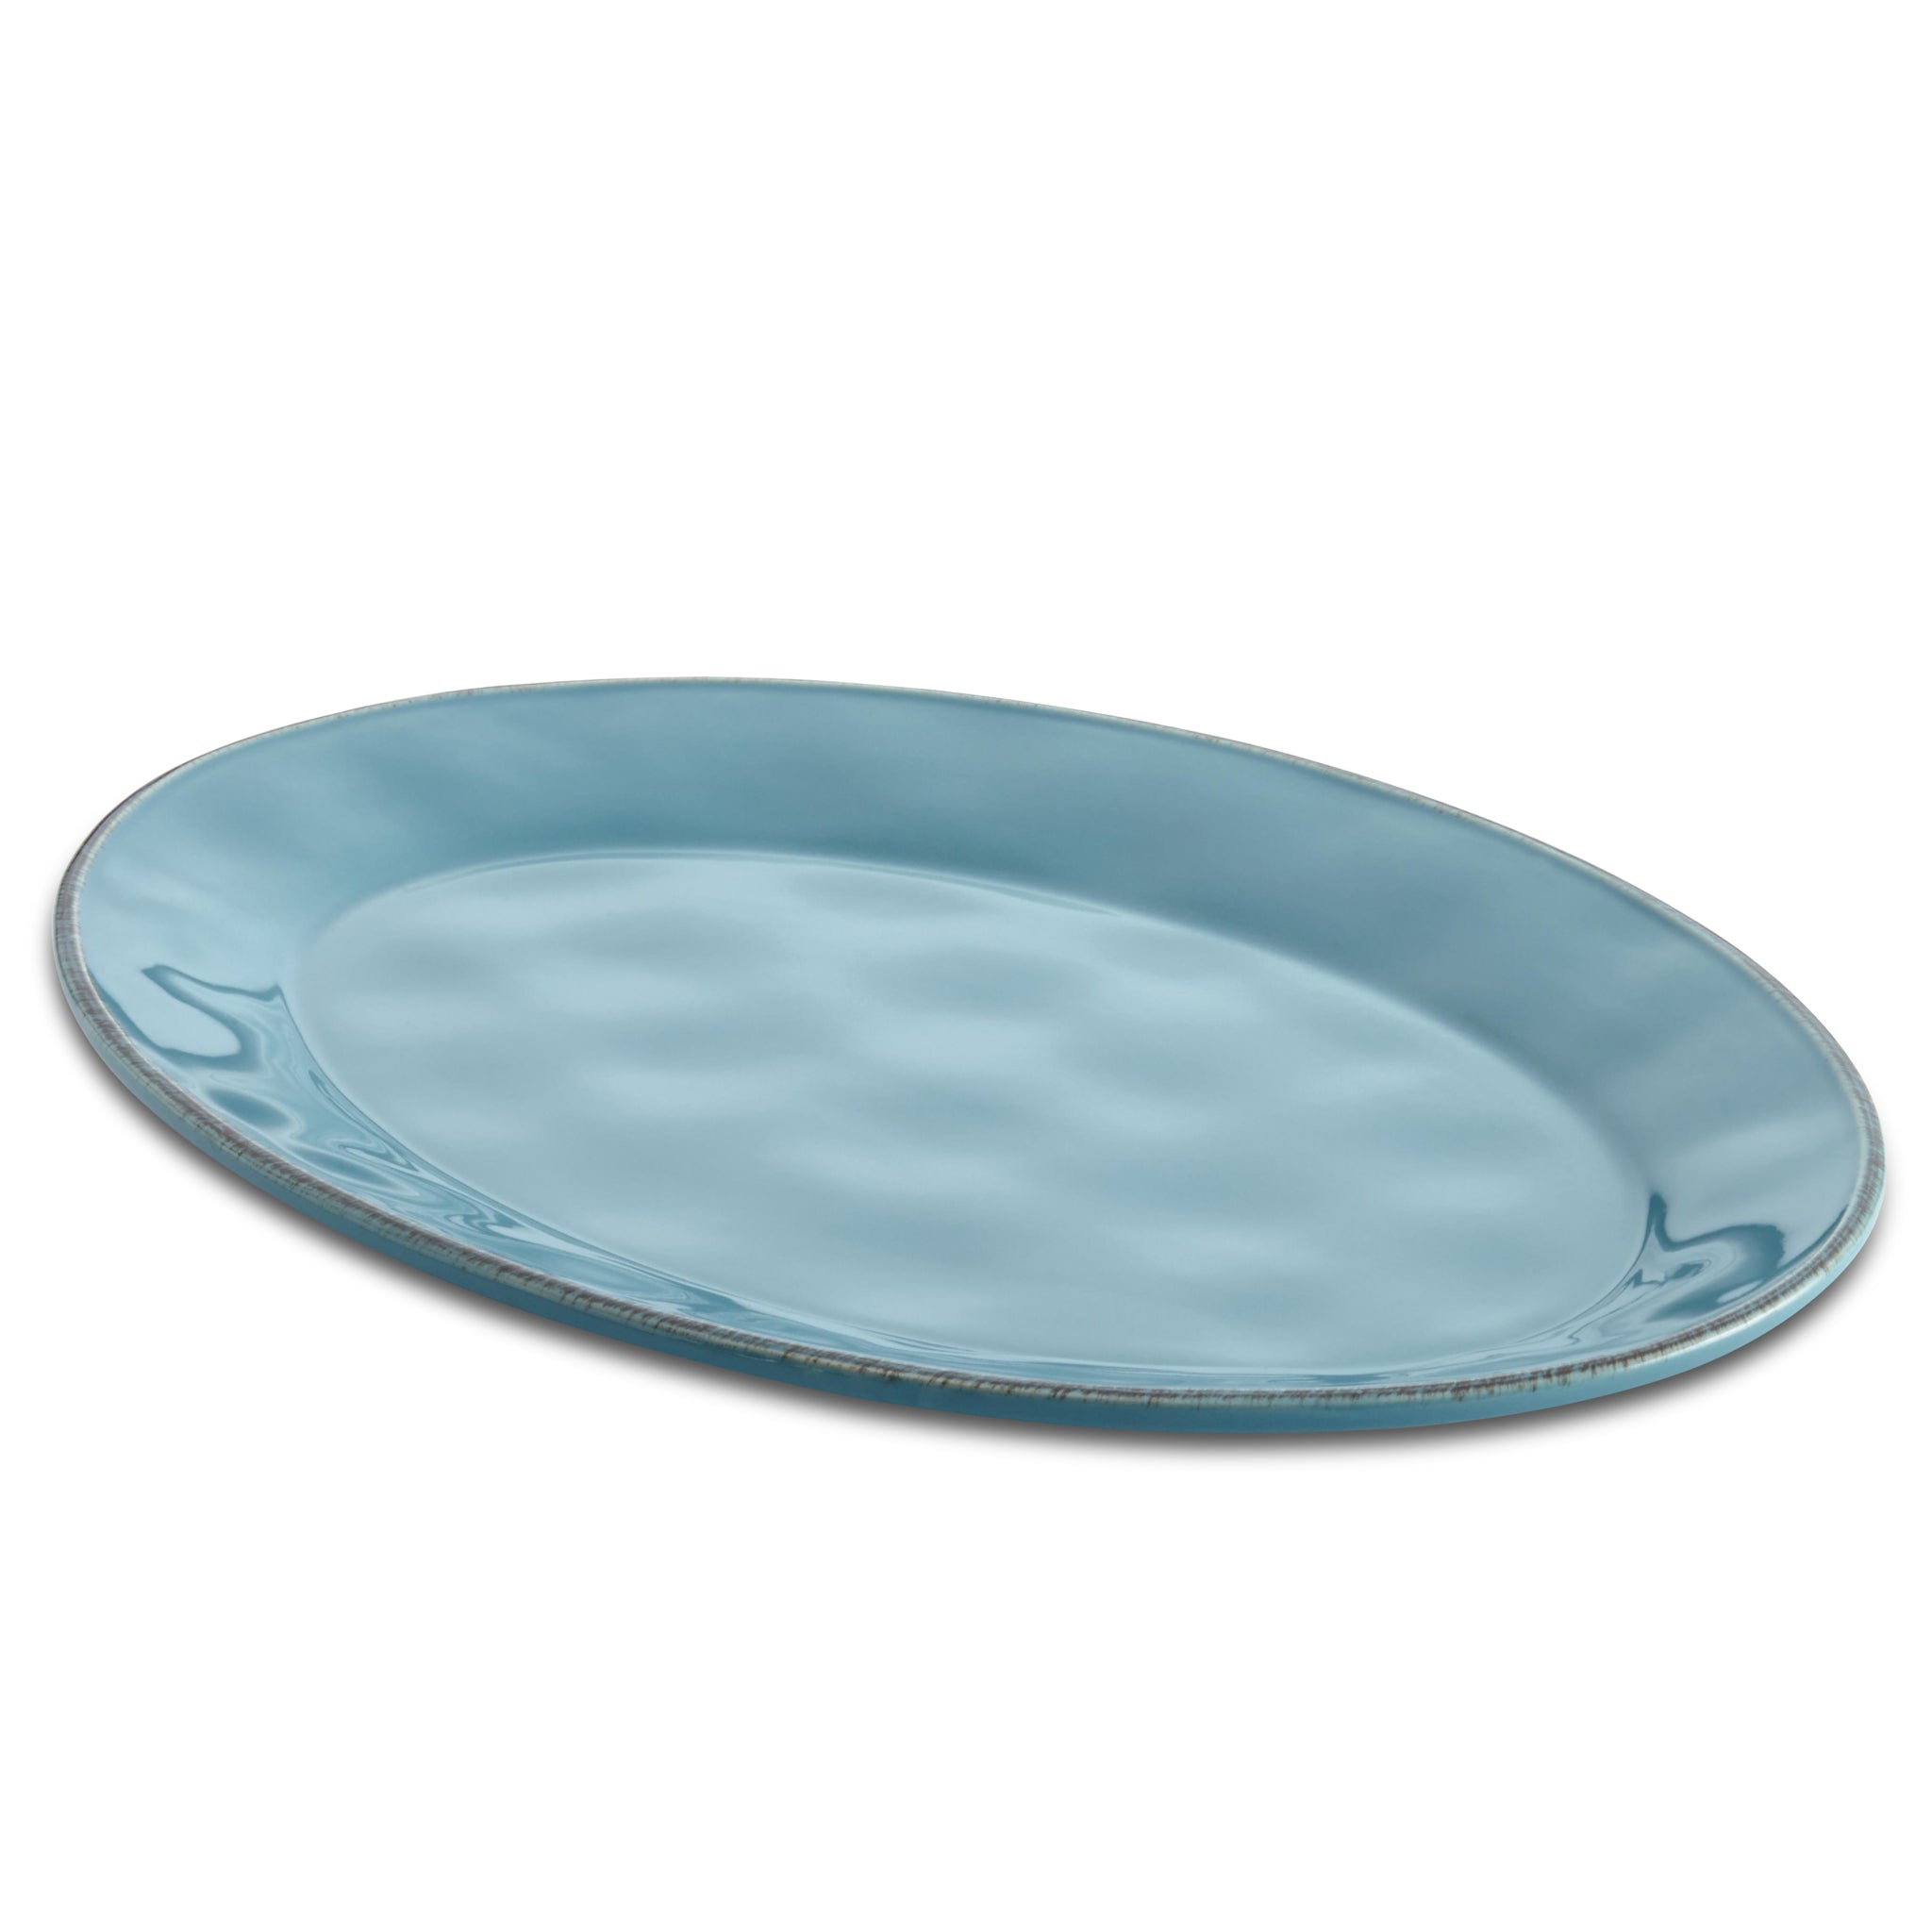 10" x 14" Oval Serving Platter